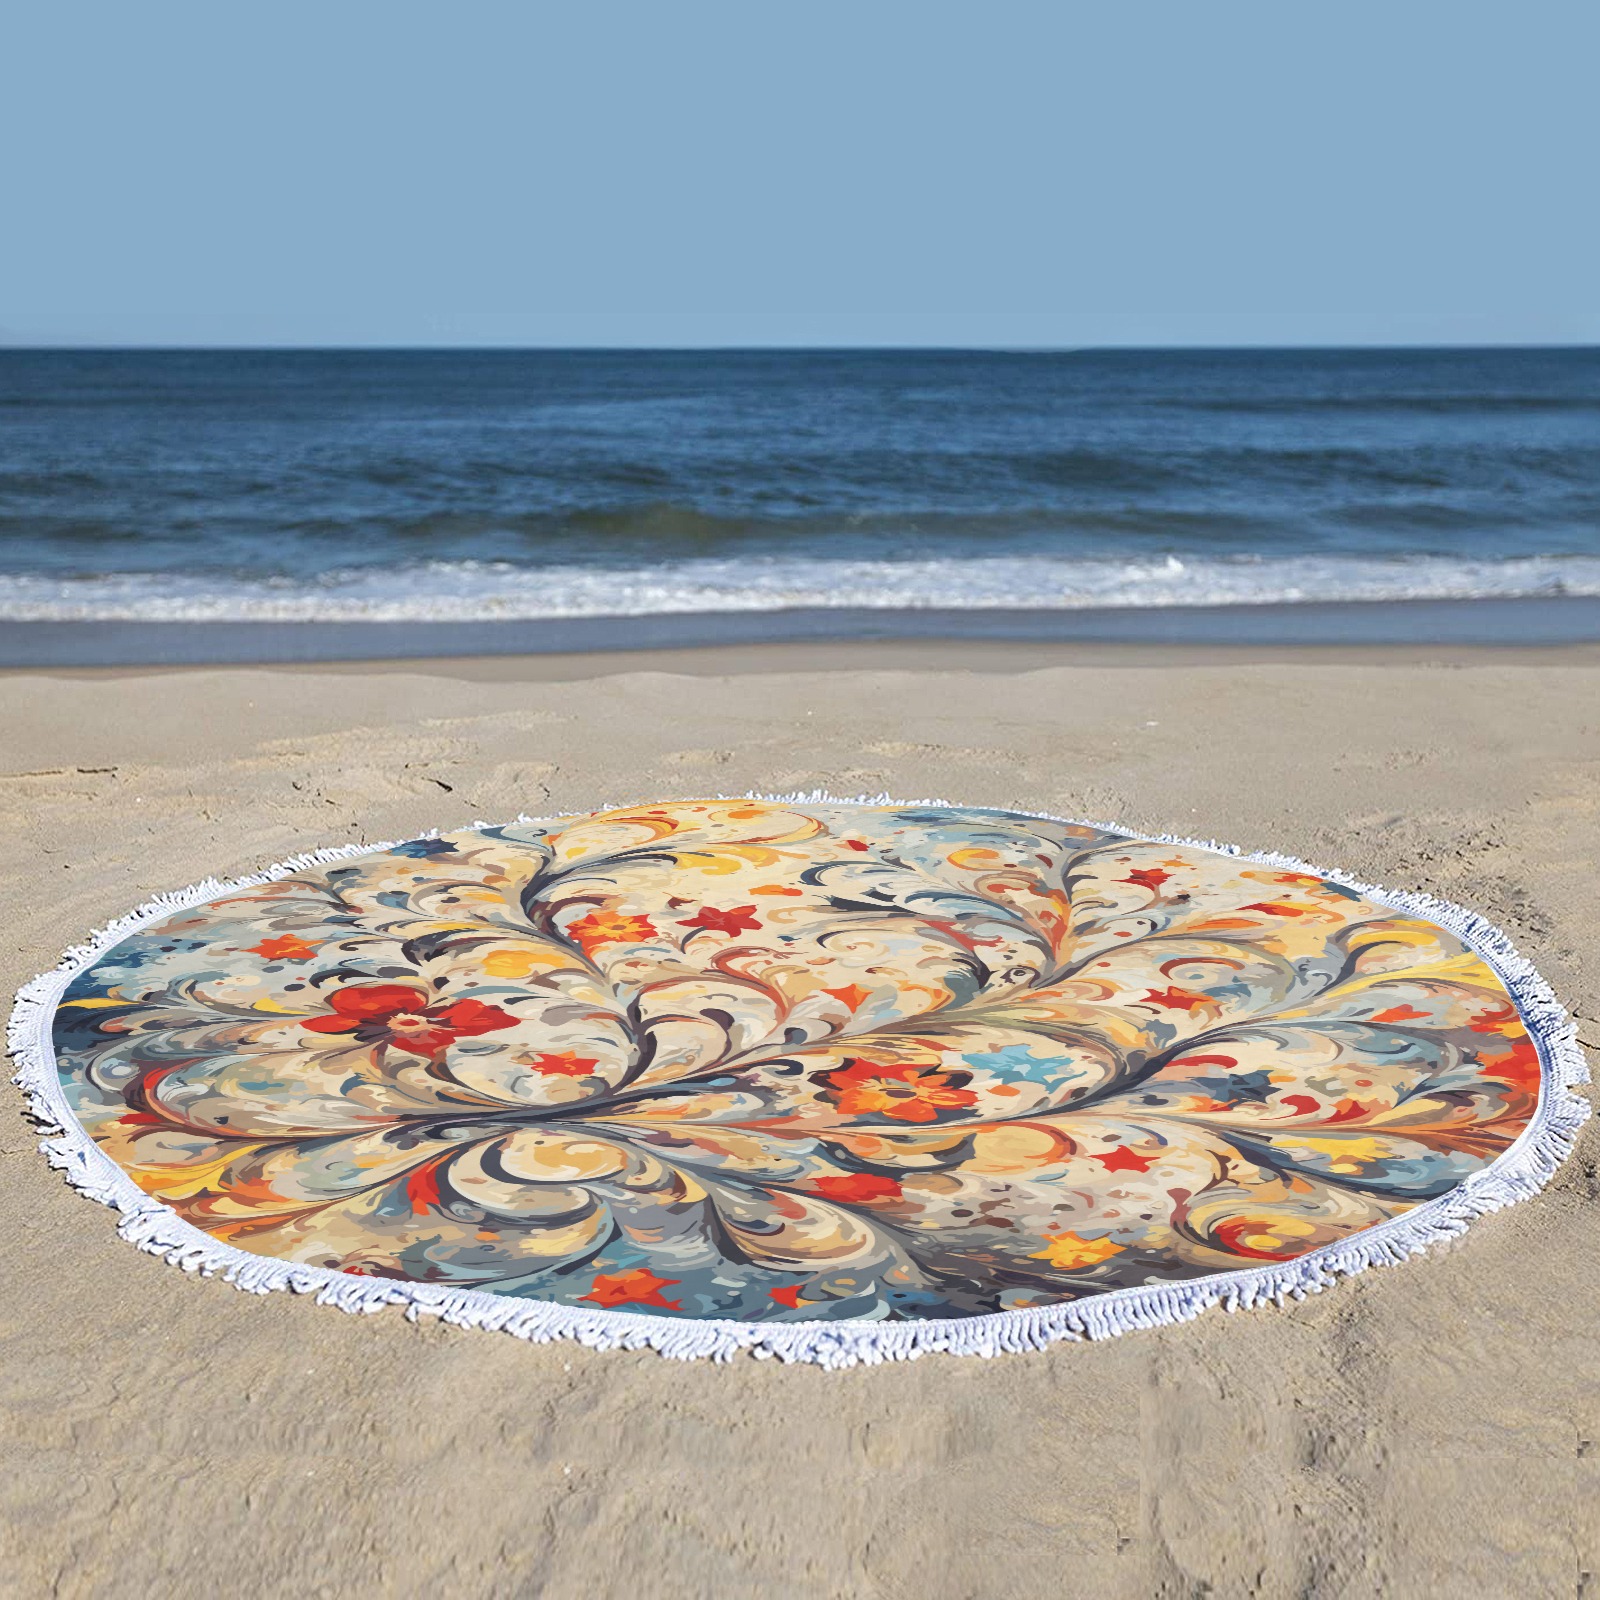 Cool decorative floral ornament. Colorful fantasy Circular Beach Shawl Towel 59"x 59"